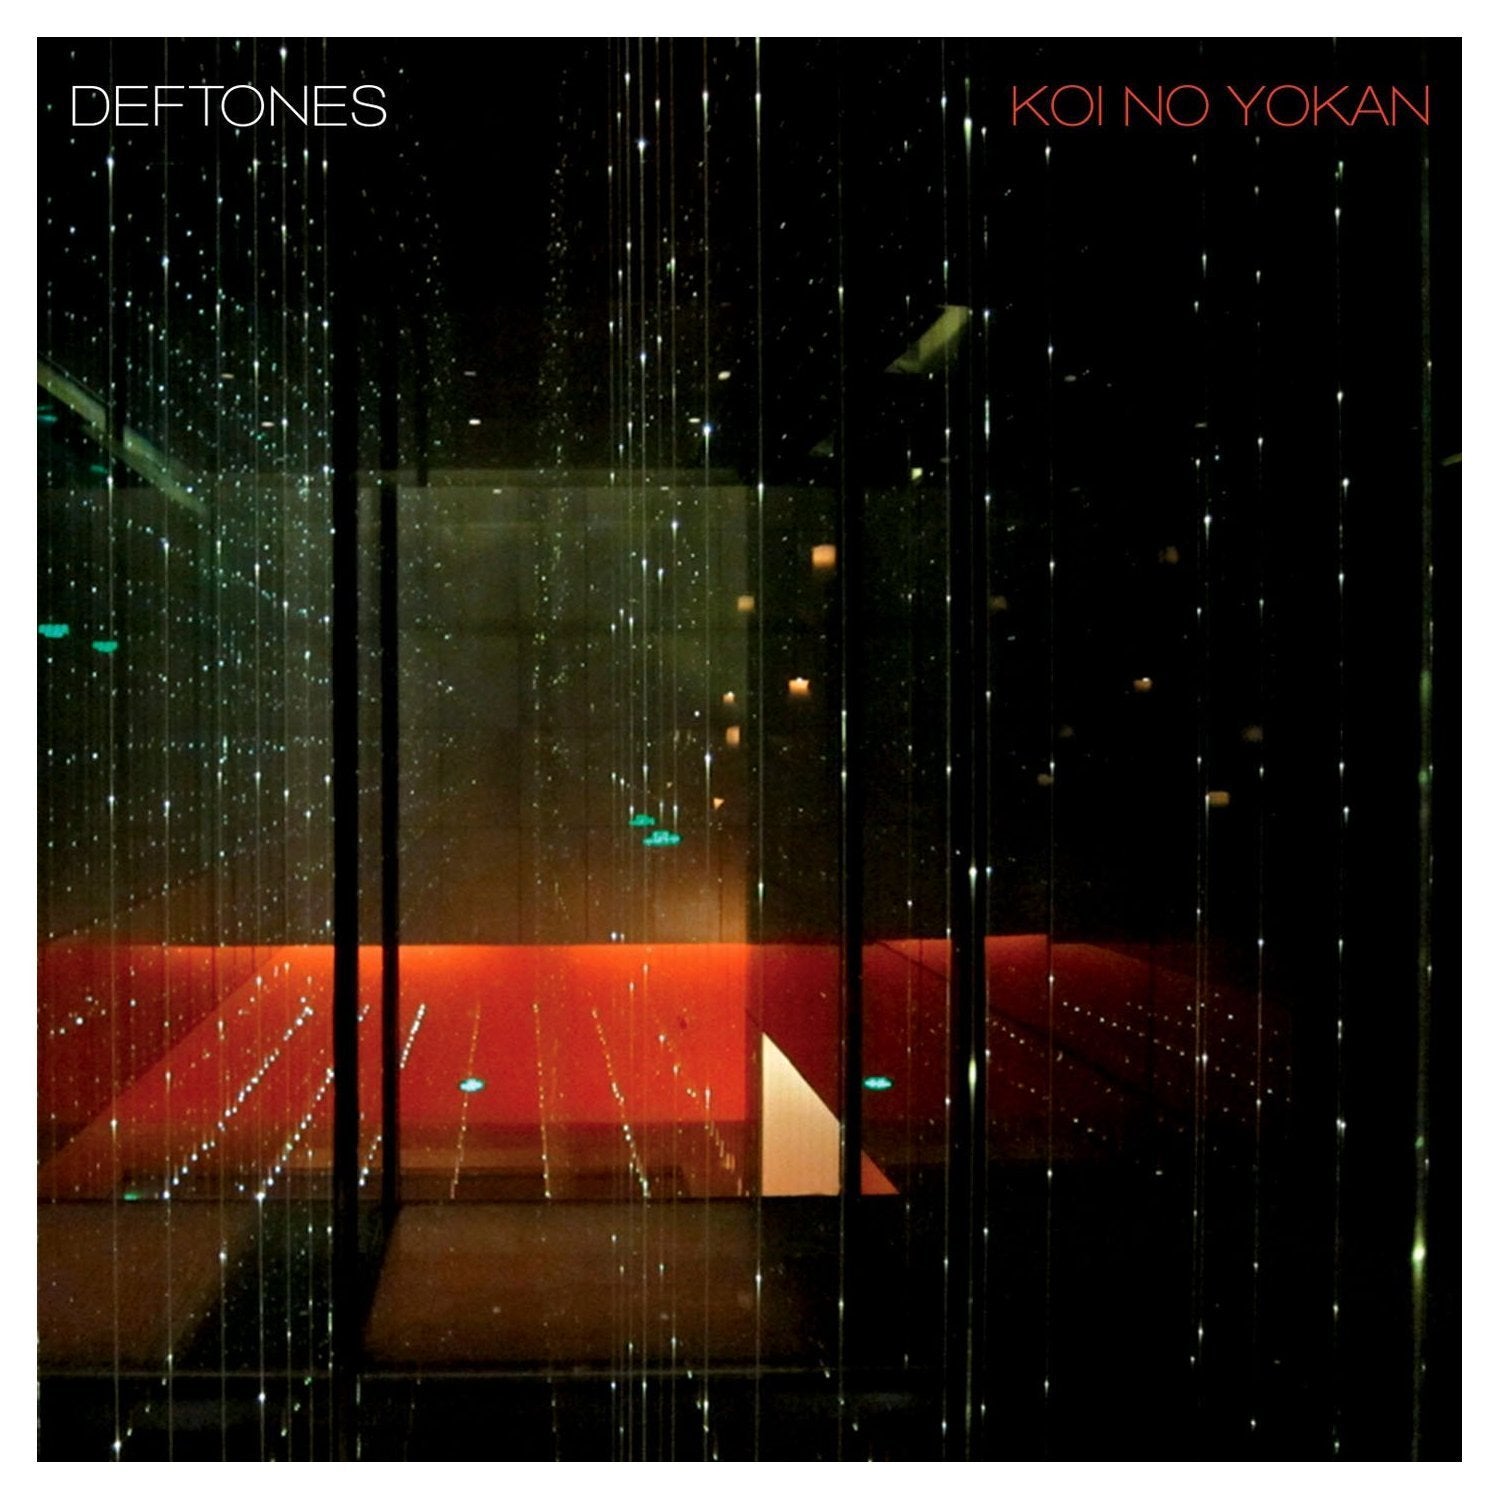 Deftones "Koi No Yokan" CD